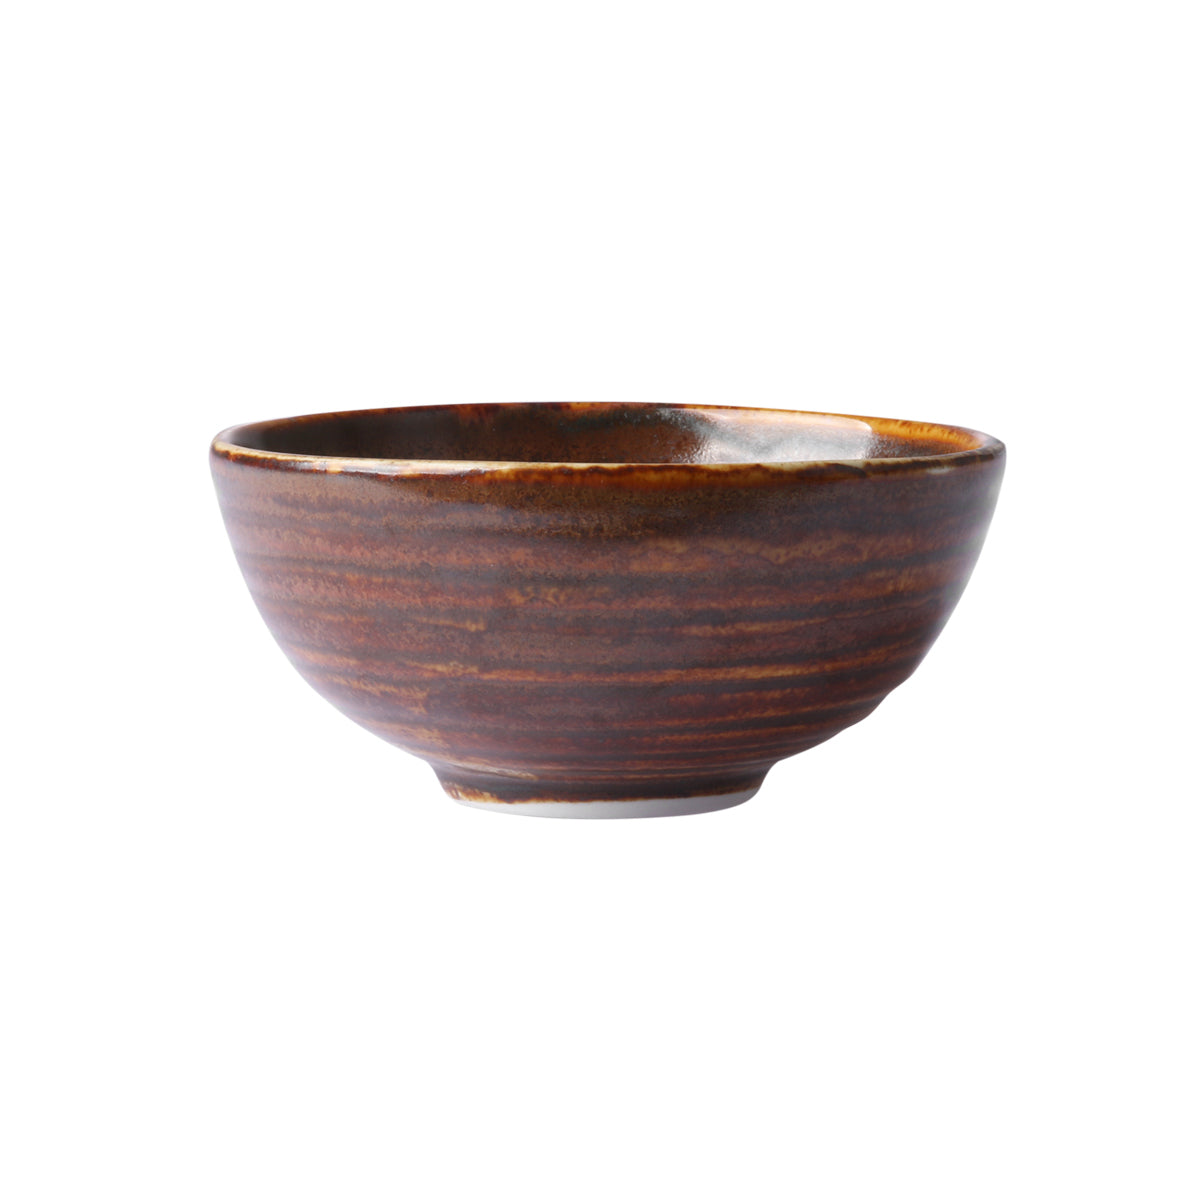 Chef Ceramics: Dessert Bowl Rustic Brown